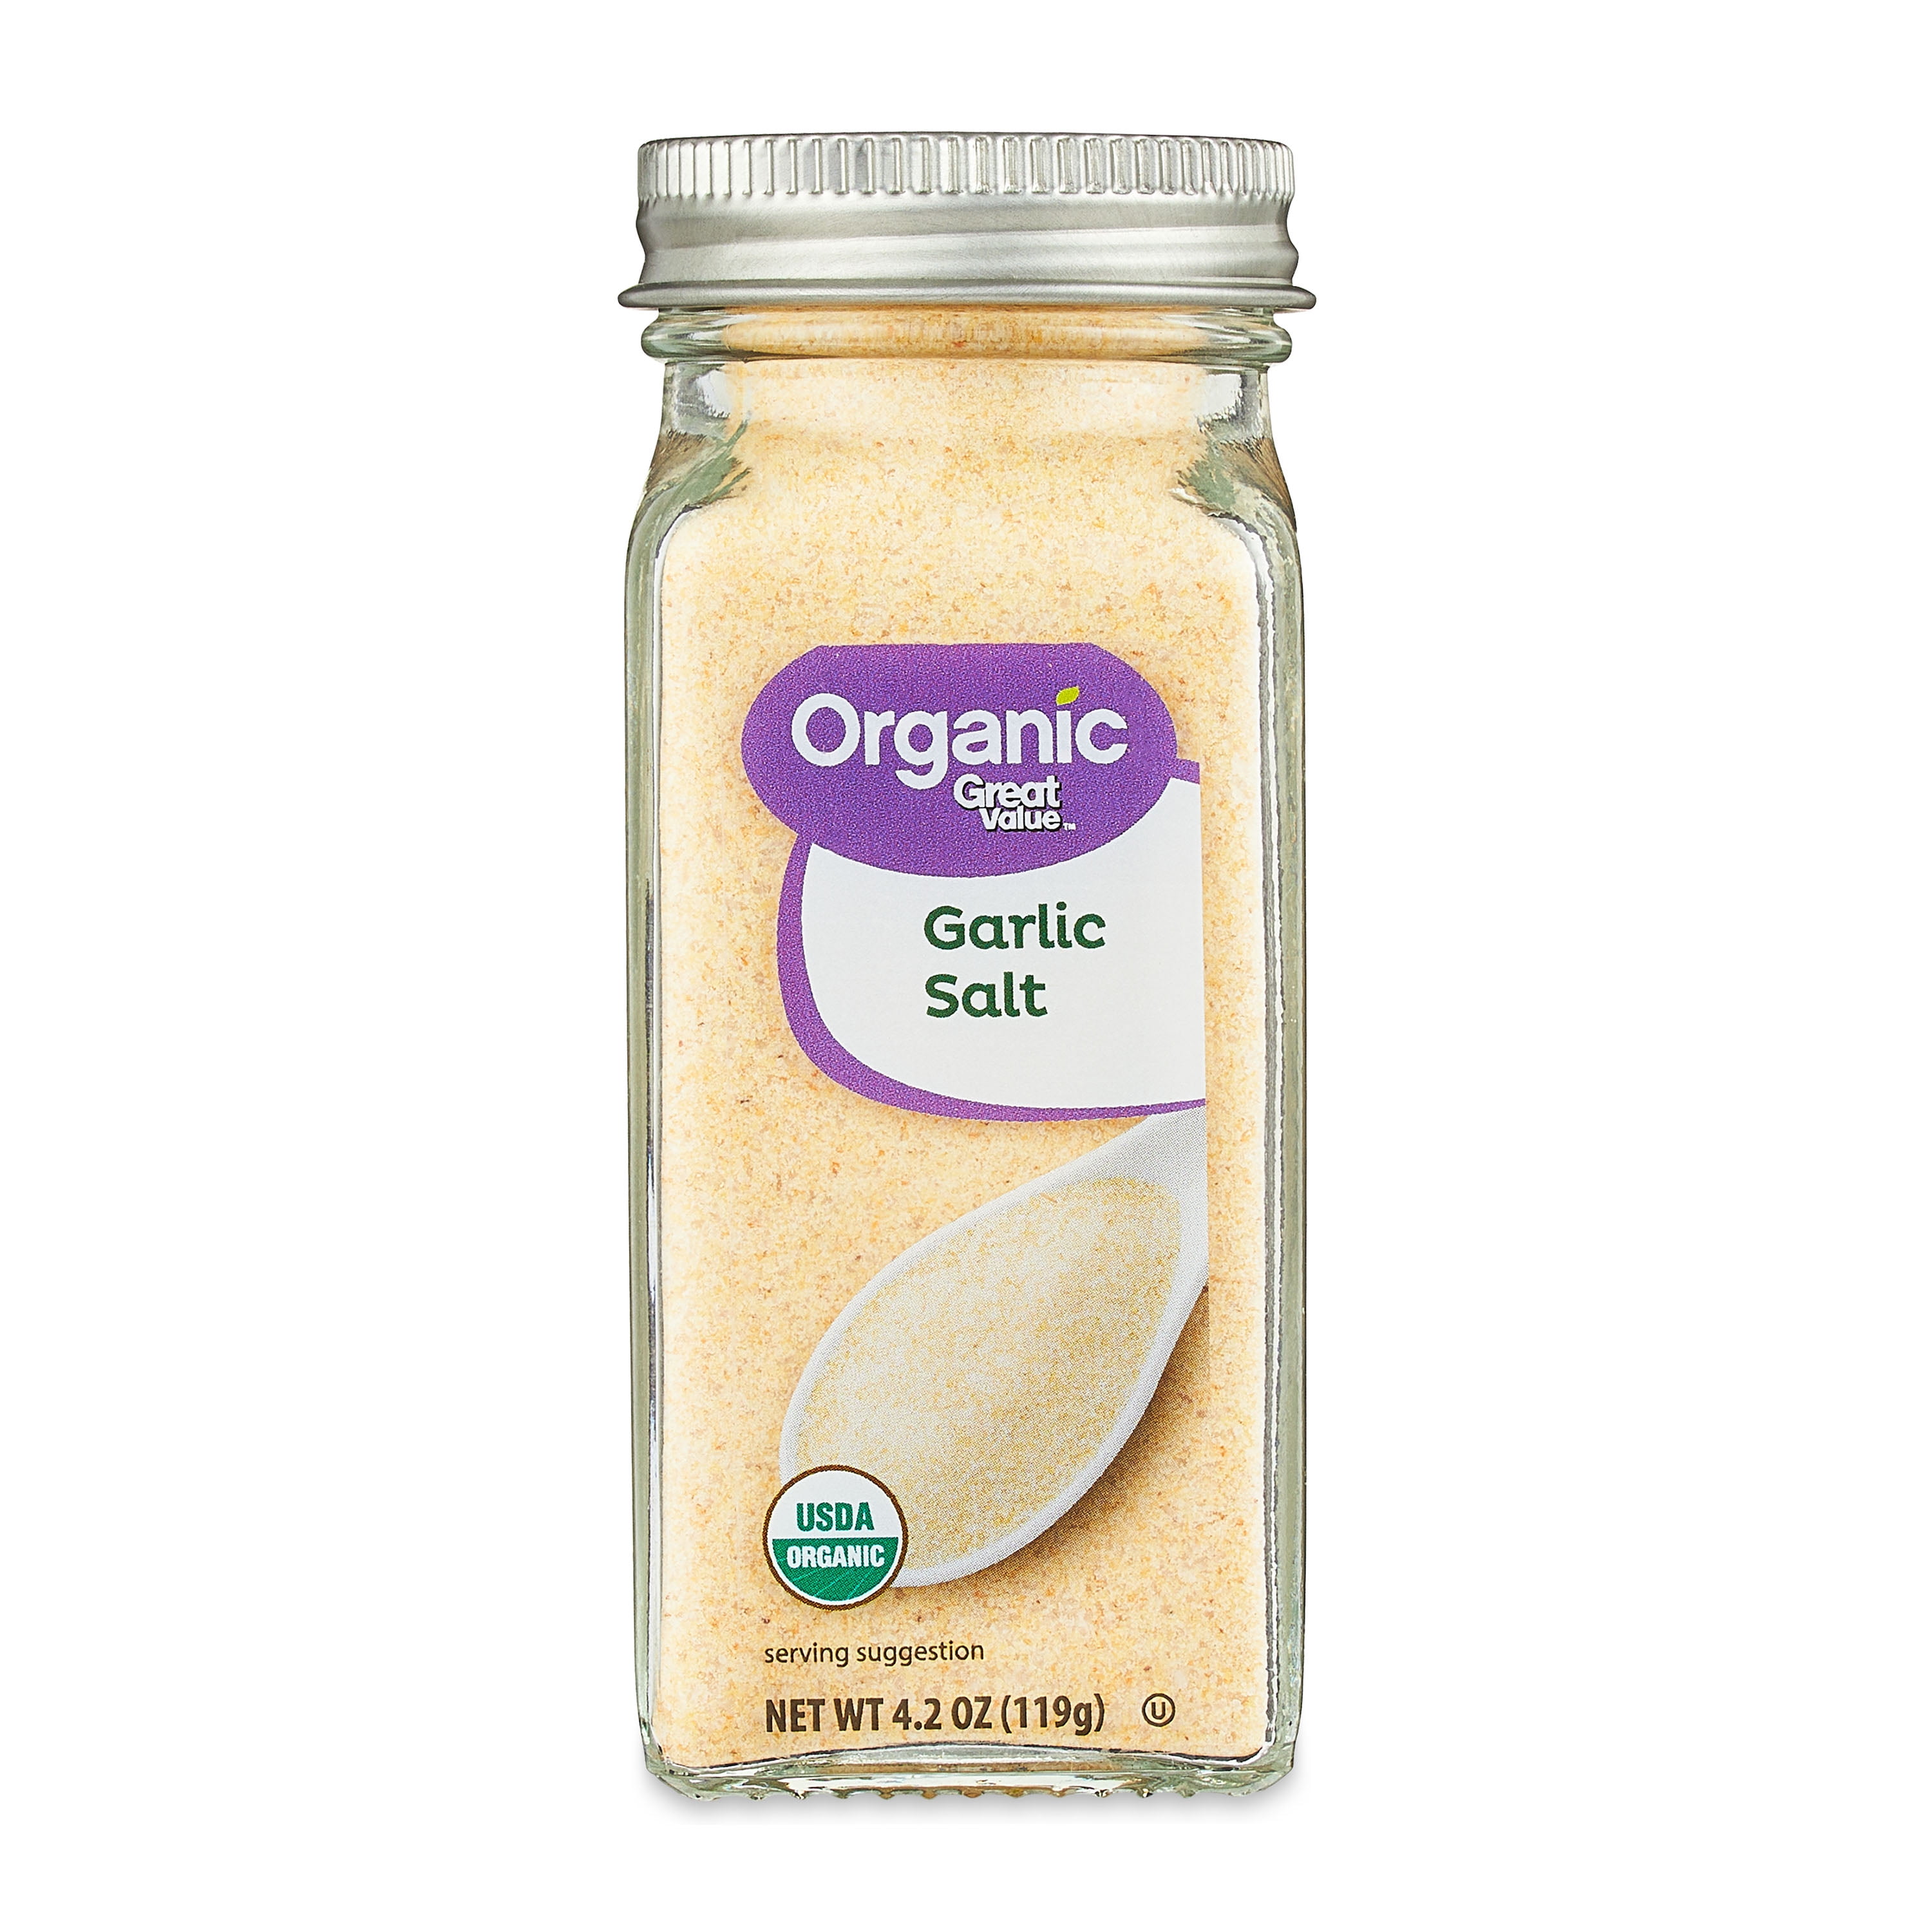 Wow POW (Enhanced Garlic Salt)